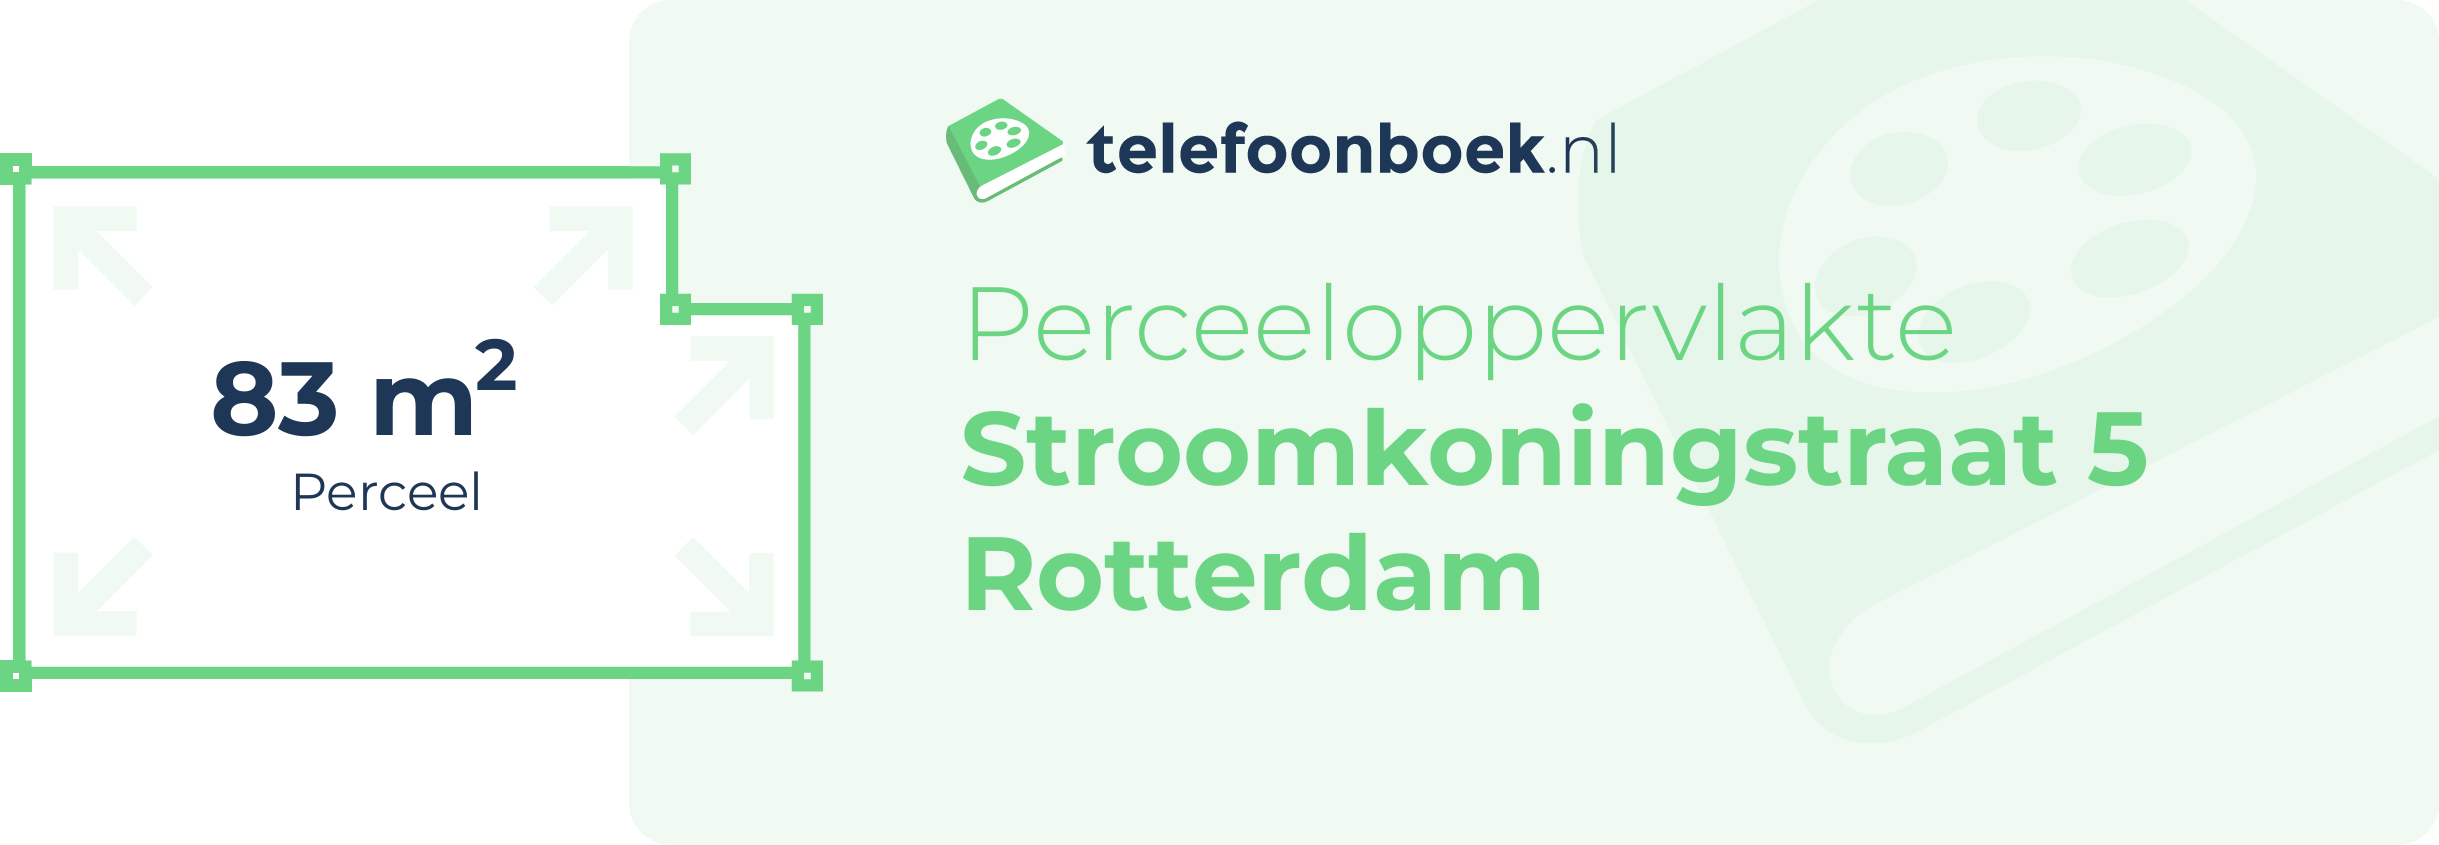 Perceeloppervlakte Stroomkoningstraat 5 Rotterdam